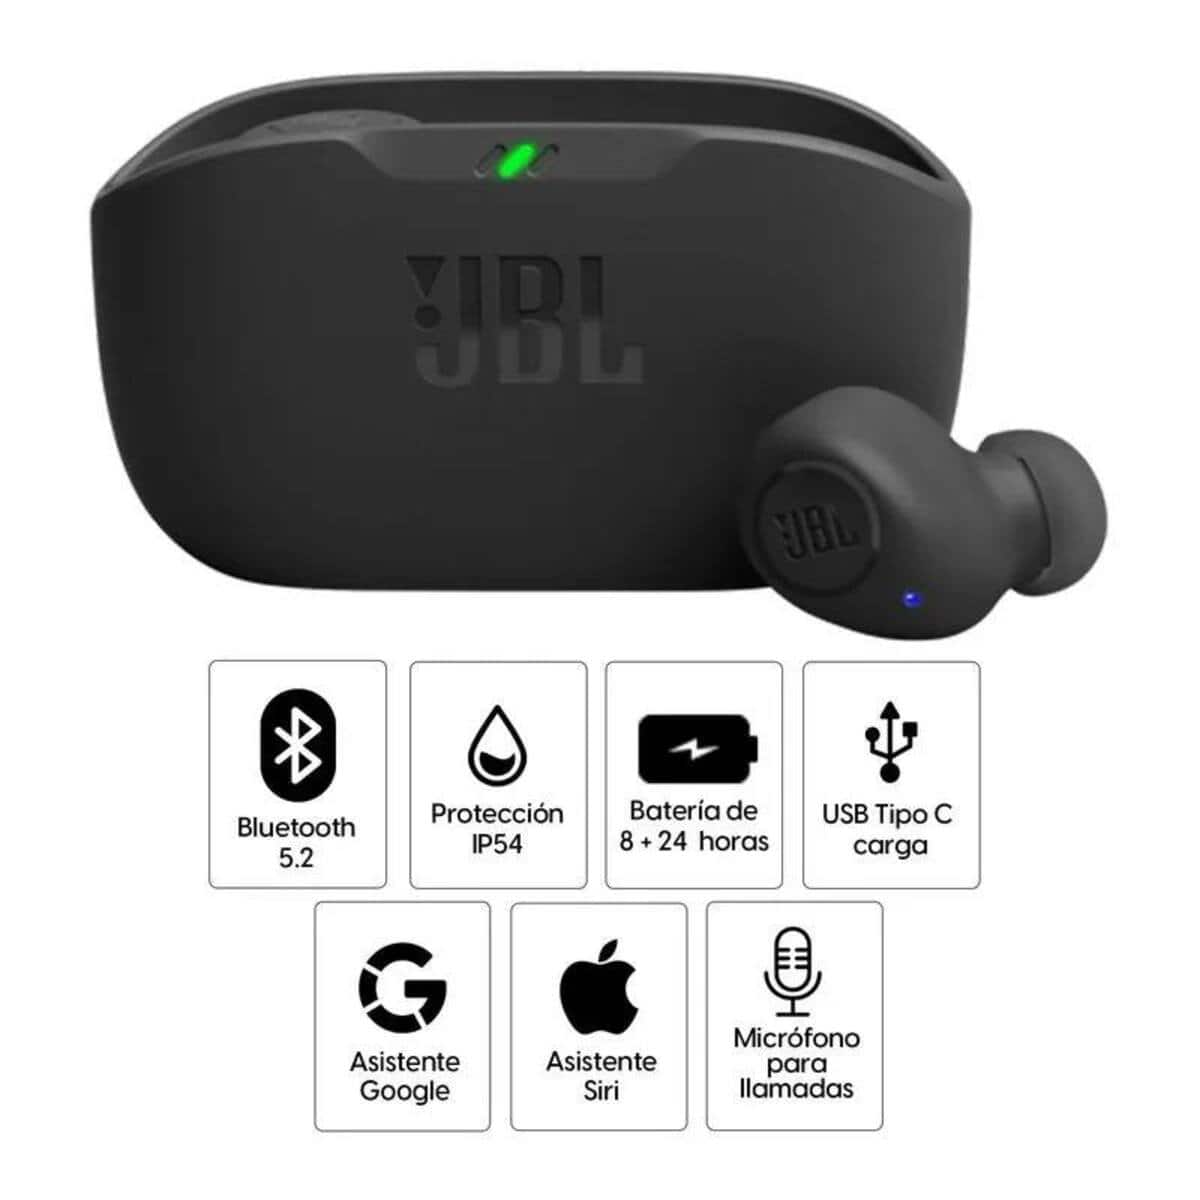 La oferta de los audífonos JBL Vibe Buds, aplica para el color negro